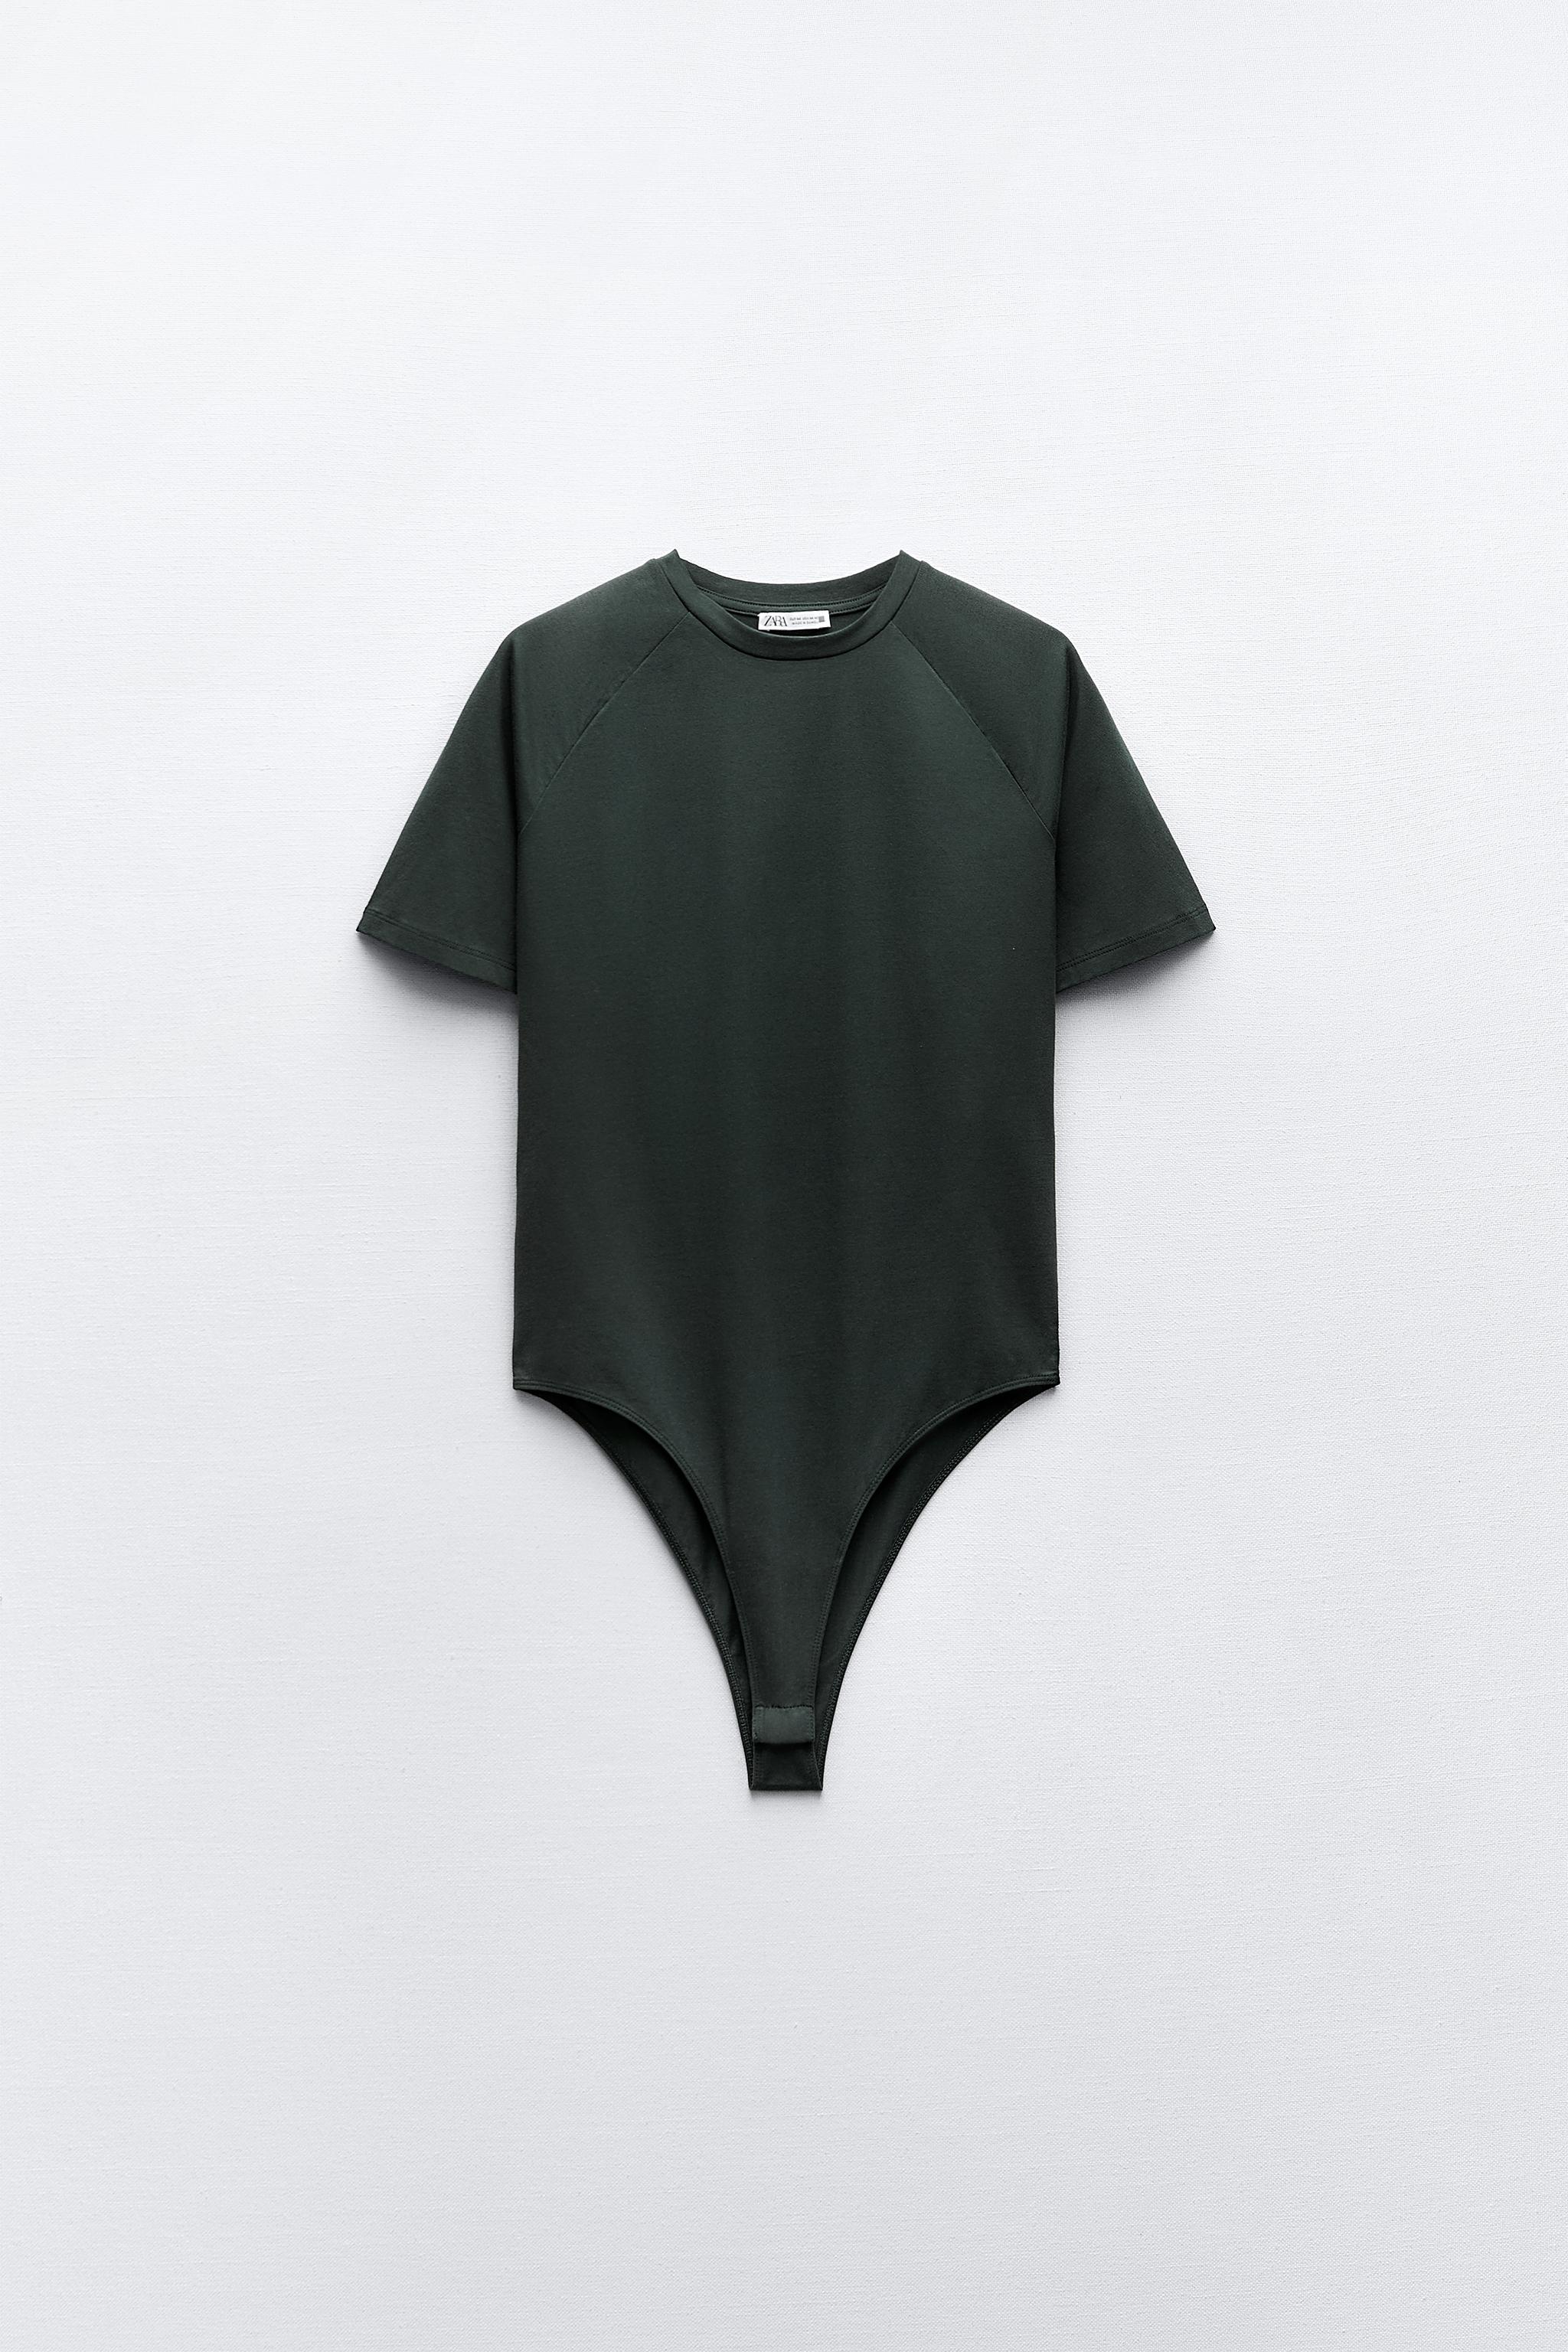 Zara - Metallic Bodysuit- (Top), Size: Medium, color: Metalllic Magenta &  Black